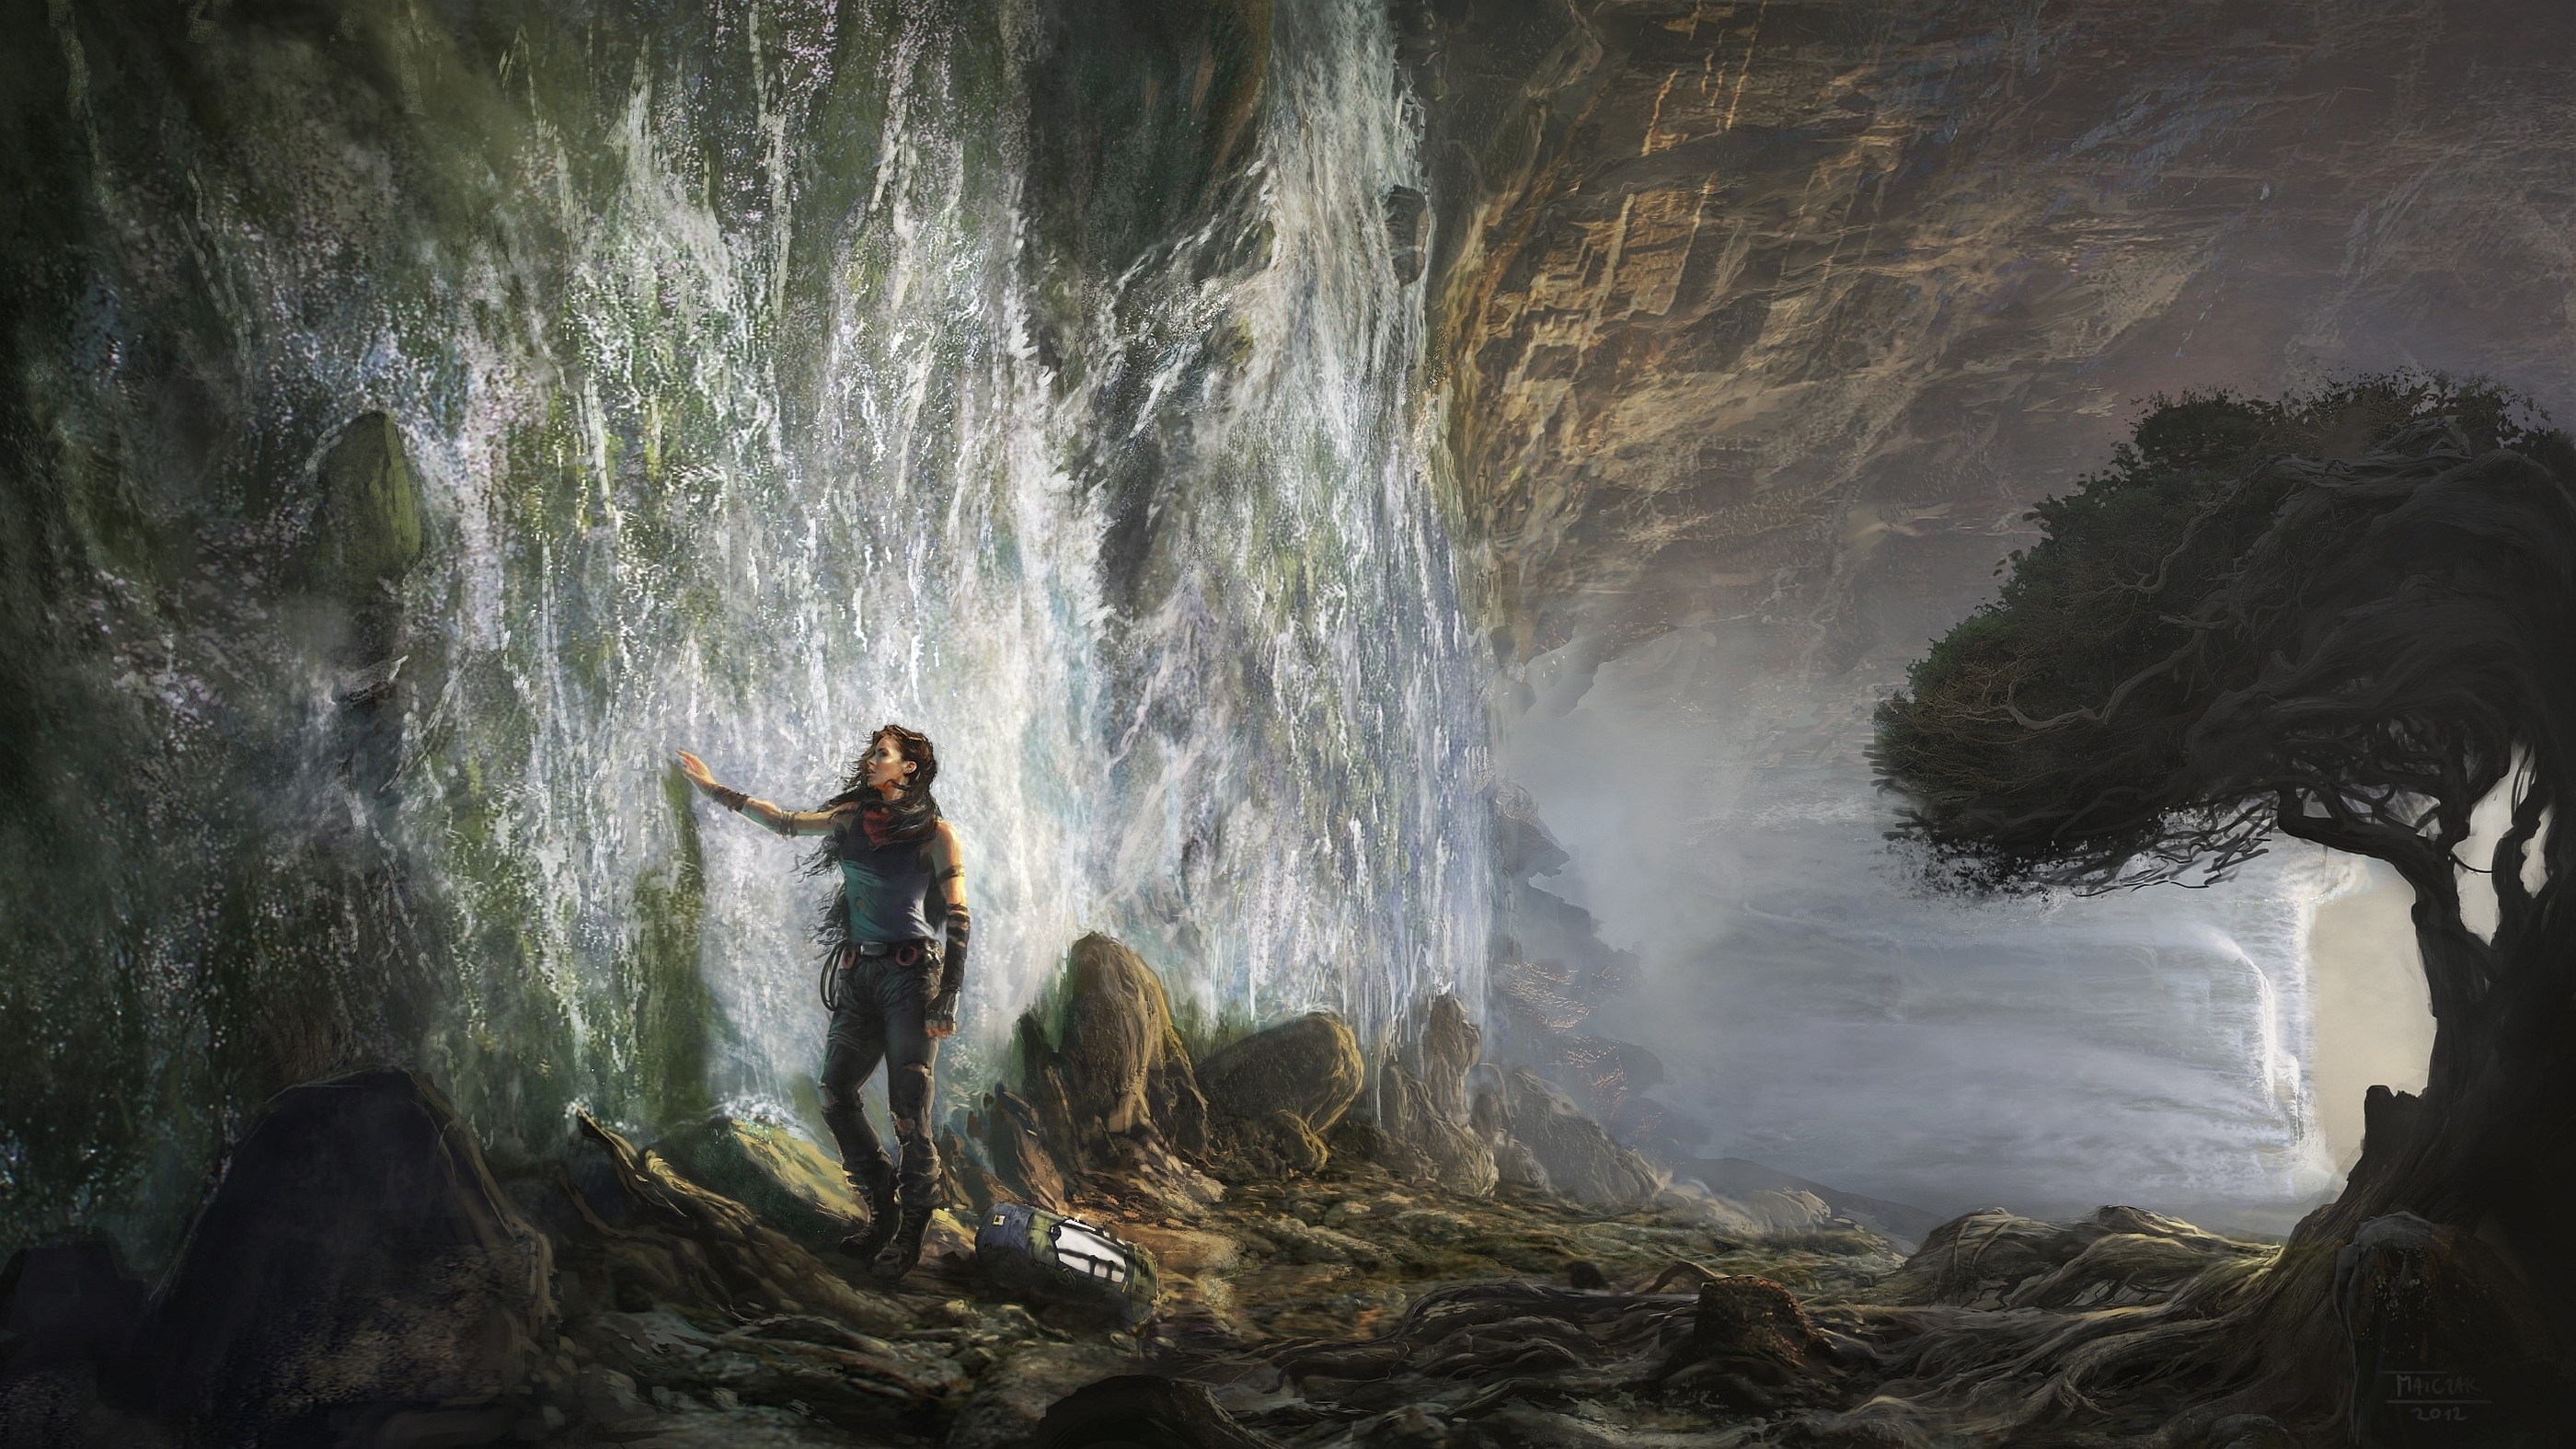 General 2800x1575 fantasy art digital art surreal women adventurers women outdoors cave